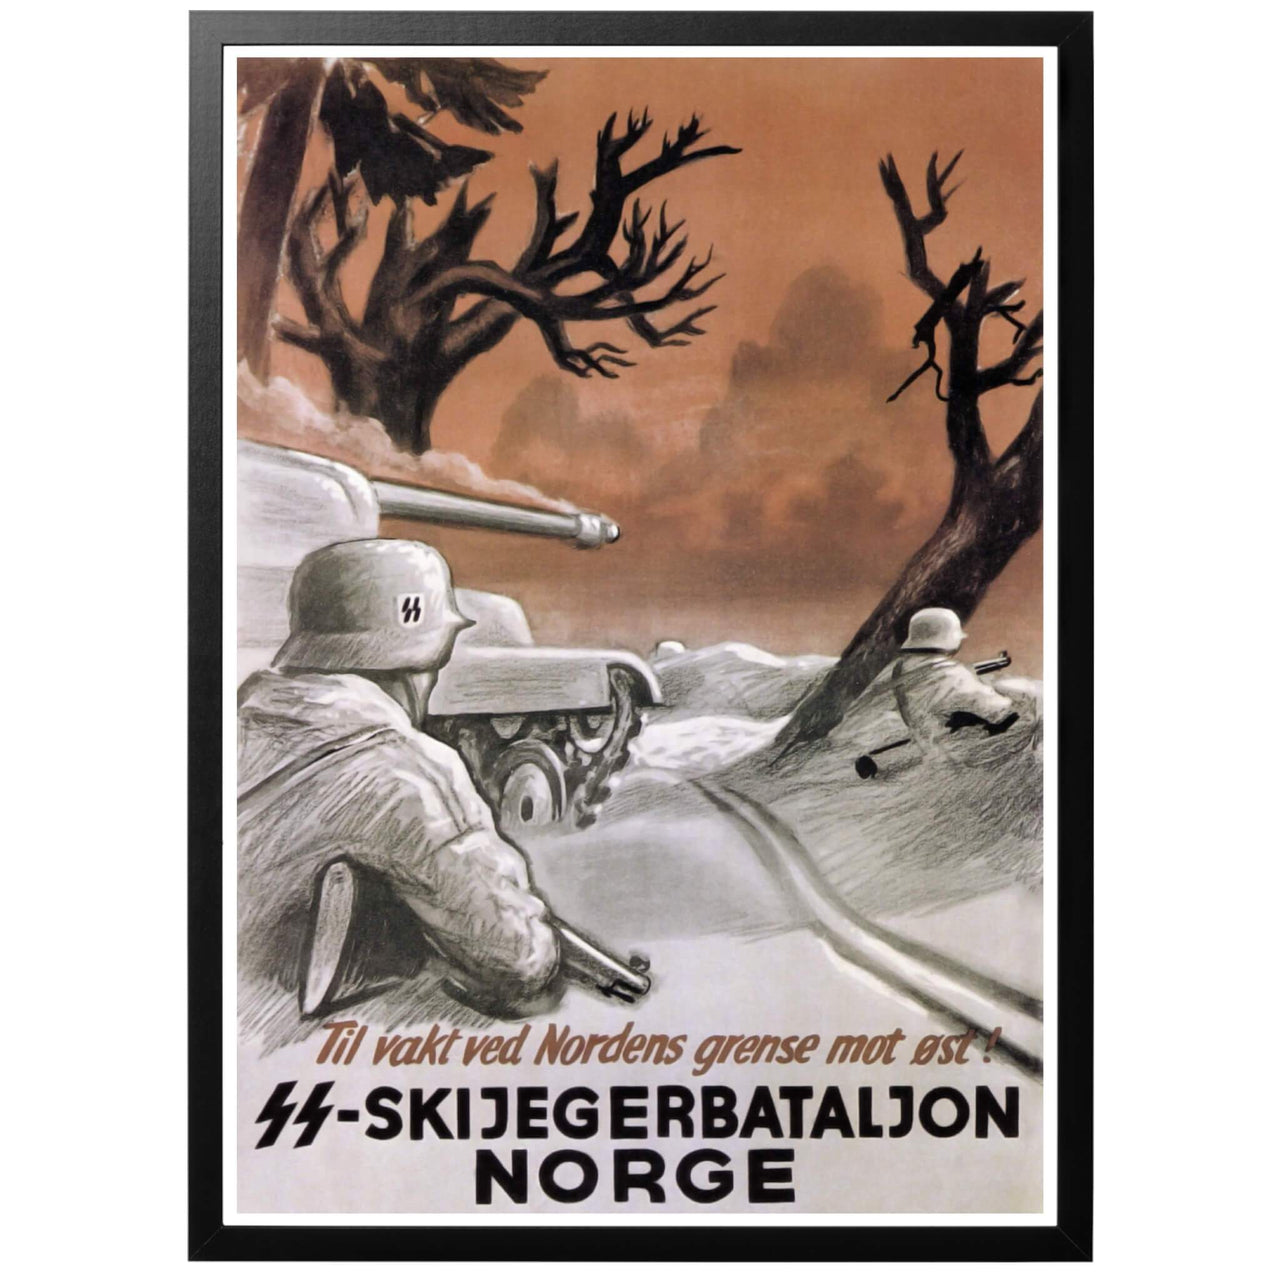 SS-Skijegerbataljon Norge Poster